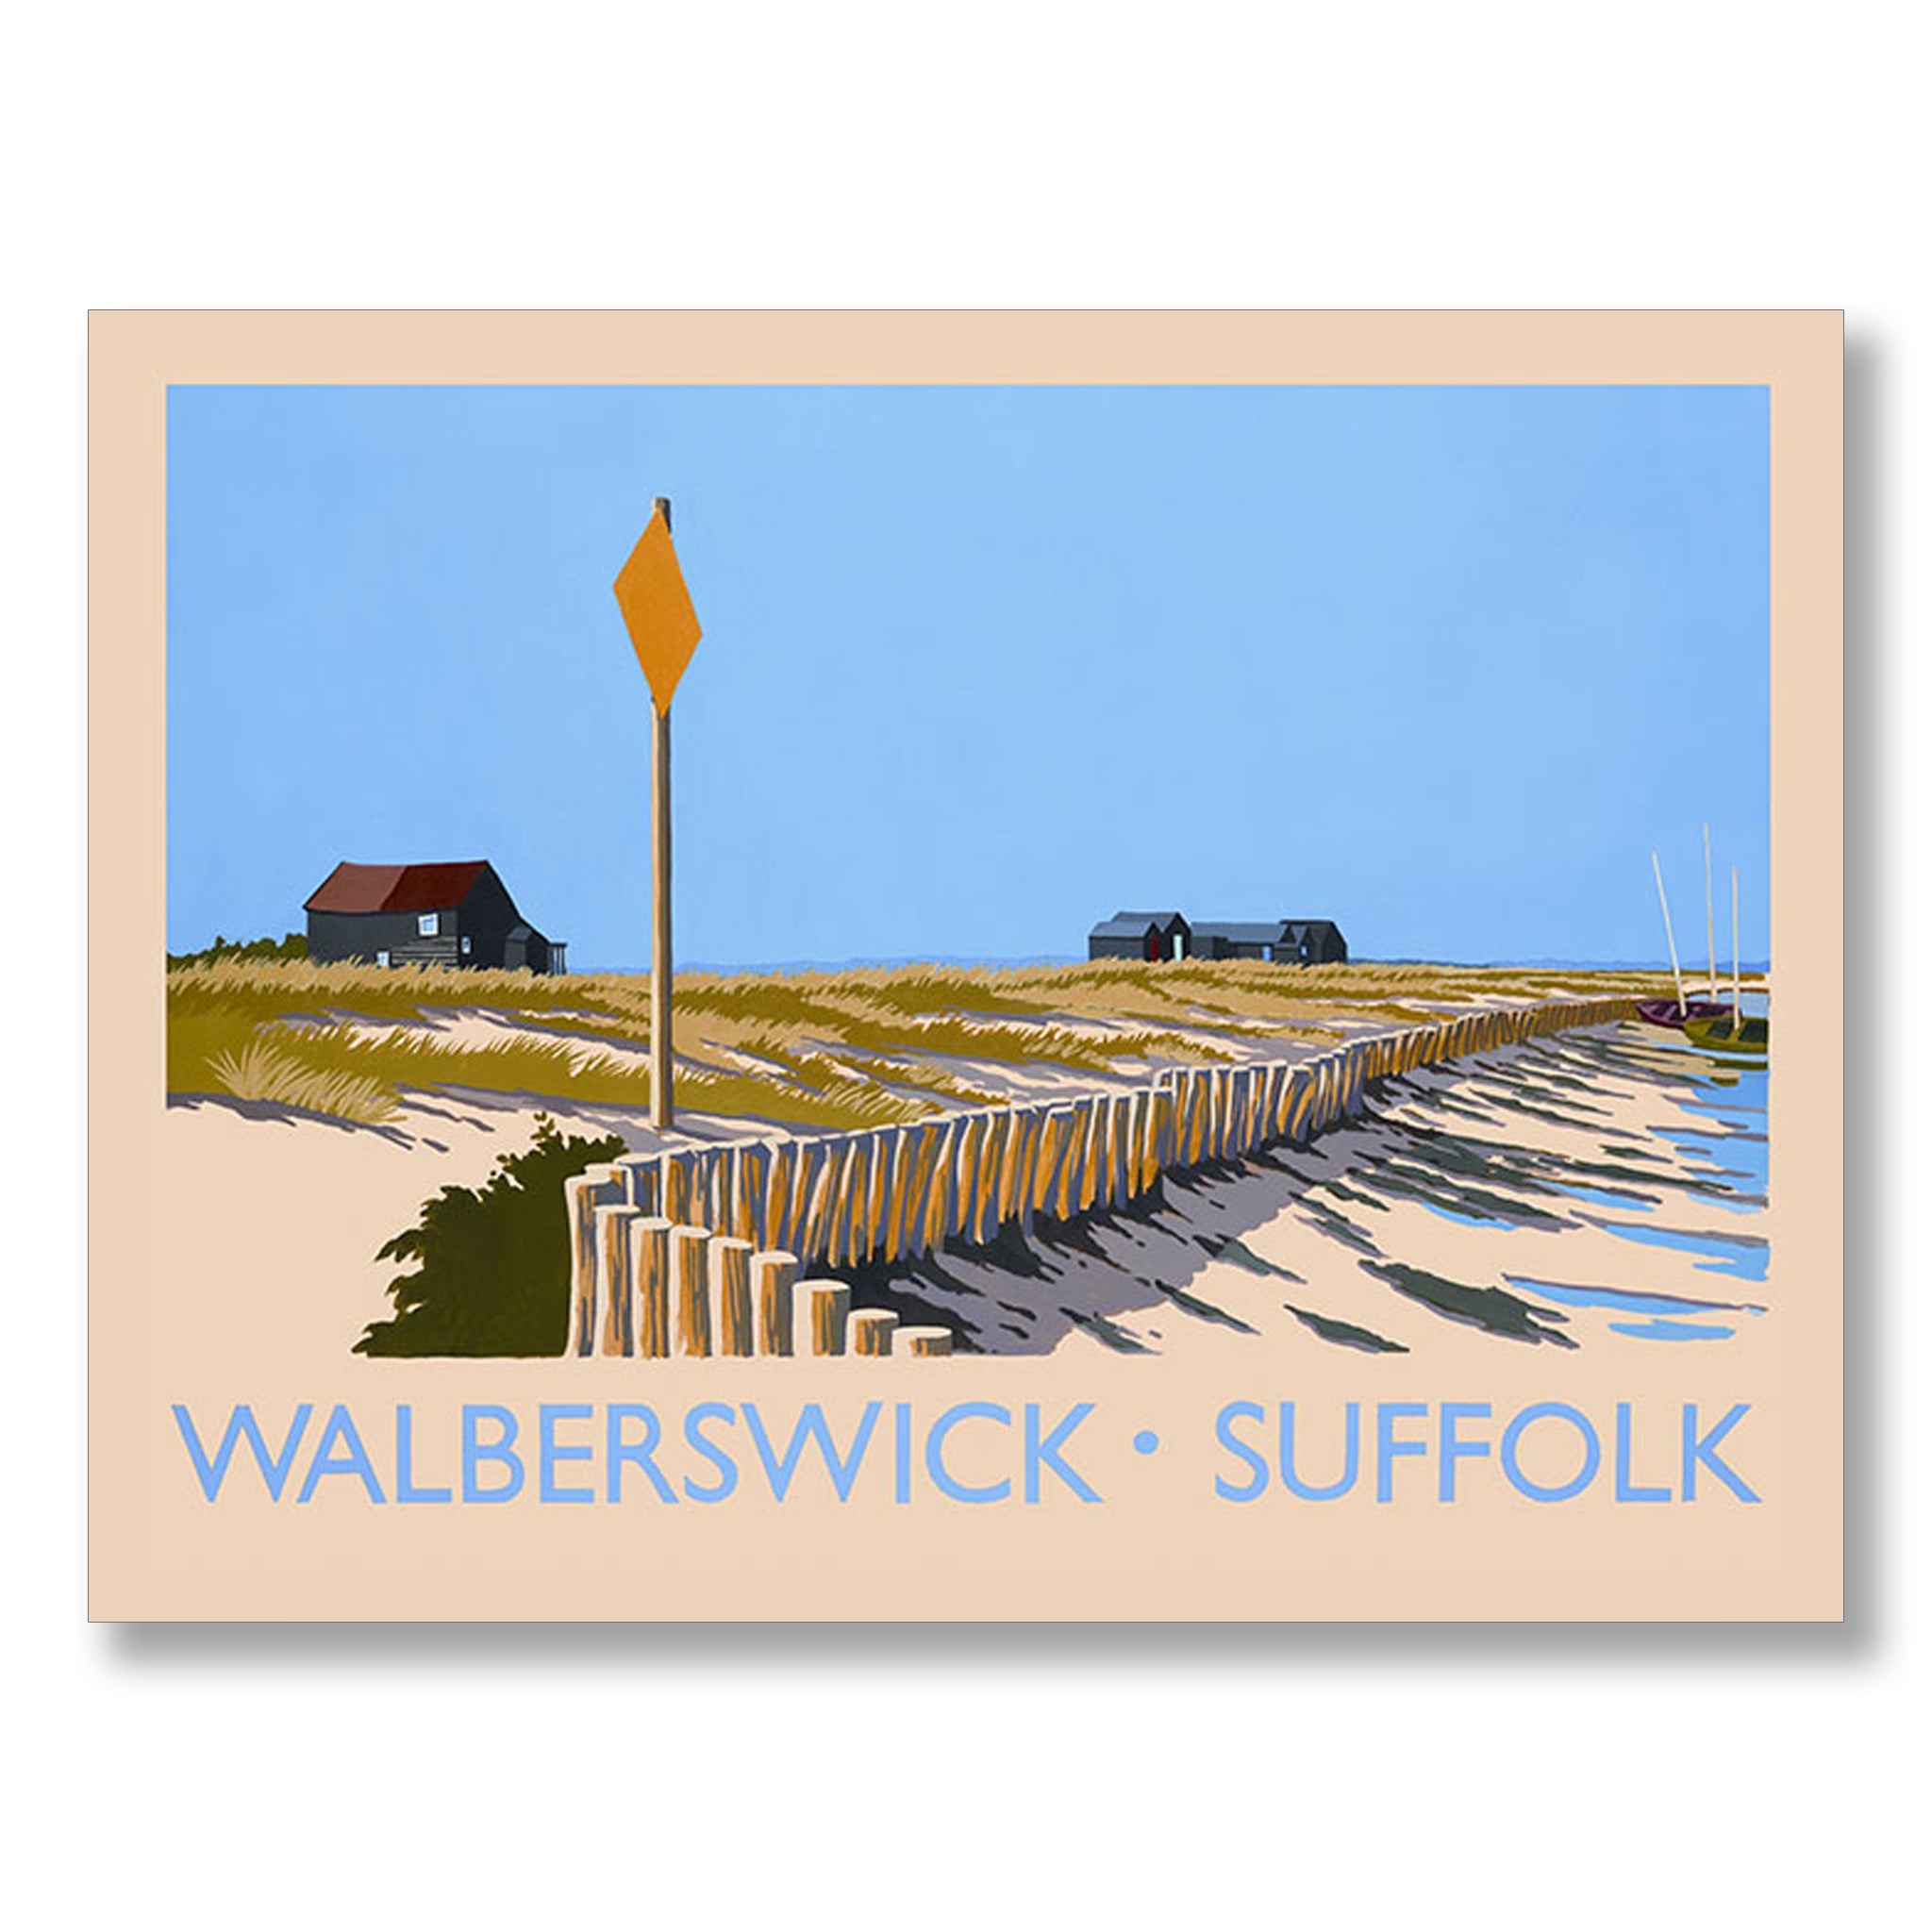 Walberswick, Suffolk by David Kirk